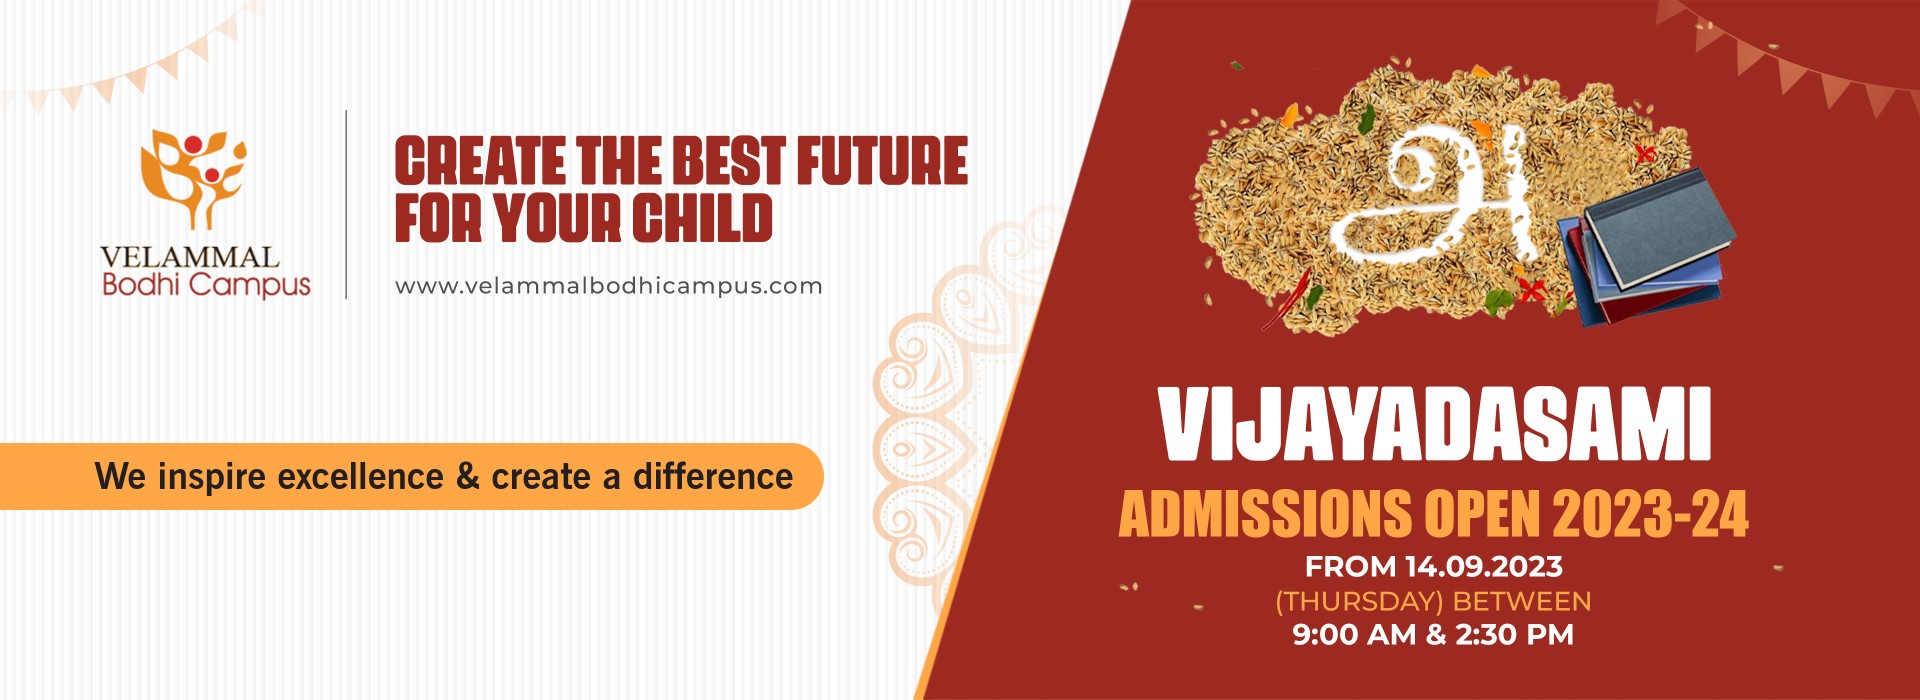 Vijayadasami Admission Open 2023-24